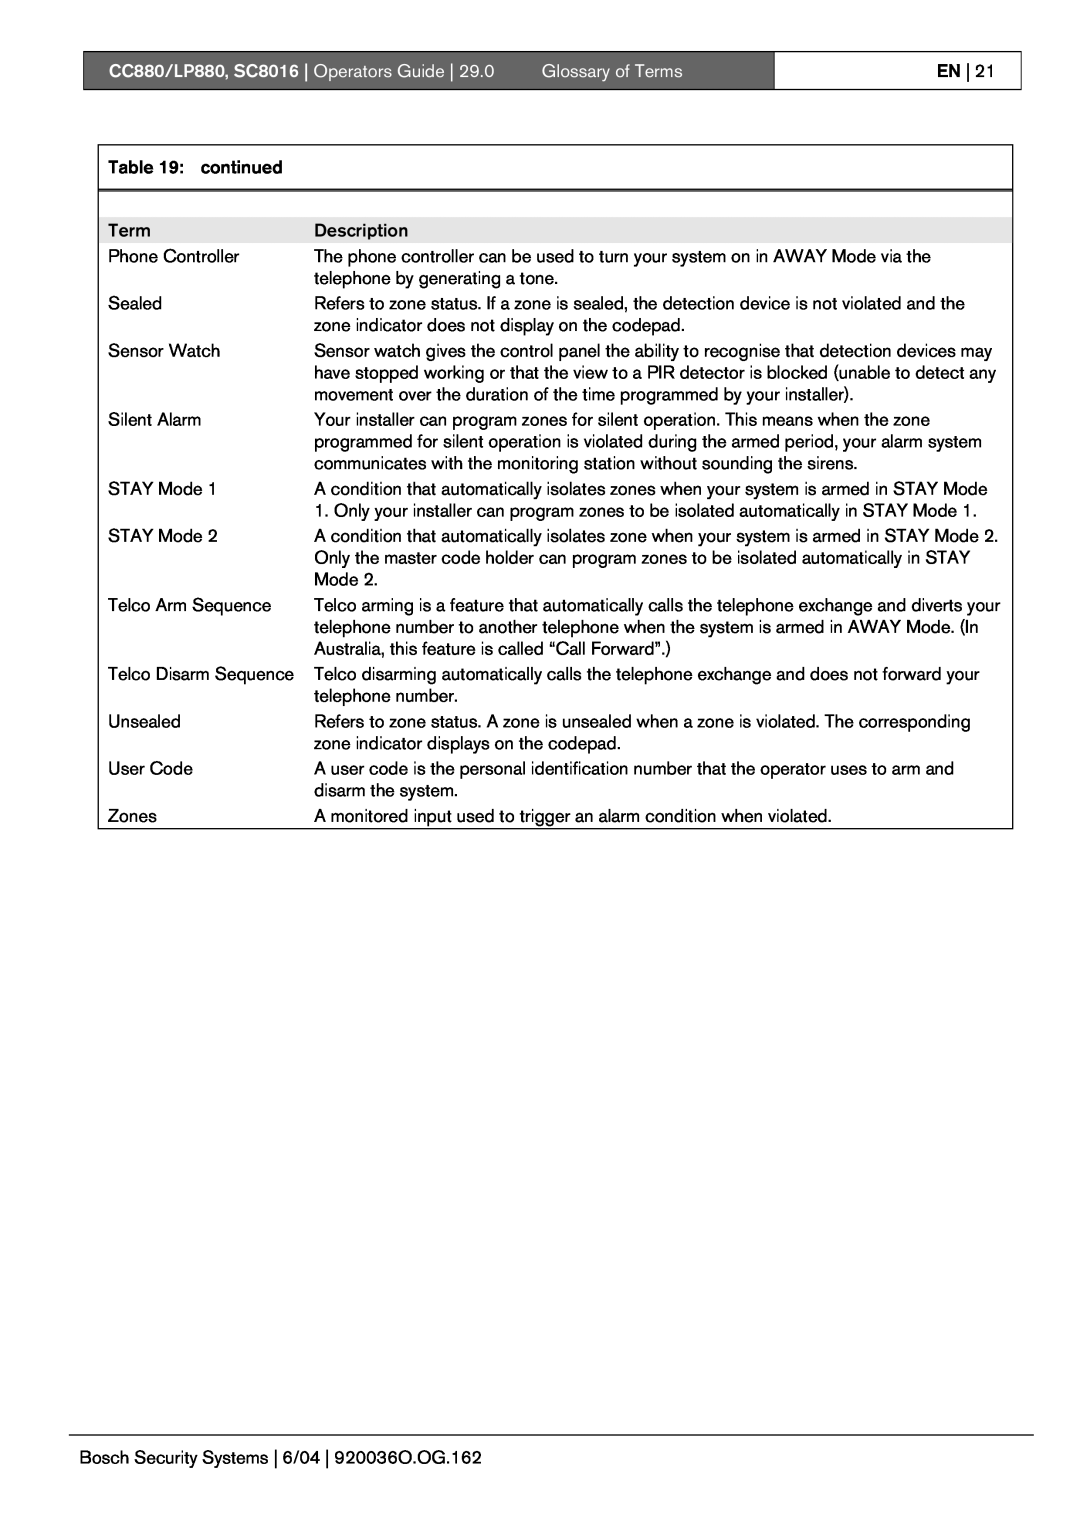 Bosch Appliances manual CC880/LP880, SC8016 Operators Guide, Glossary of Terms, En 